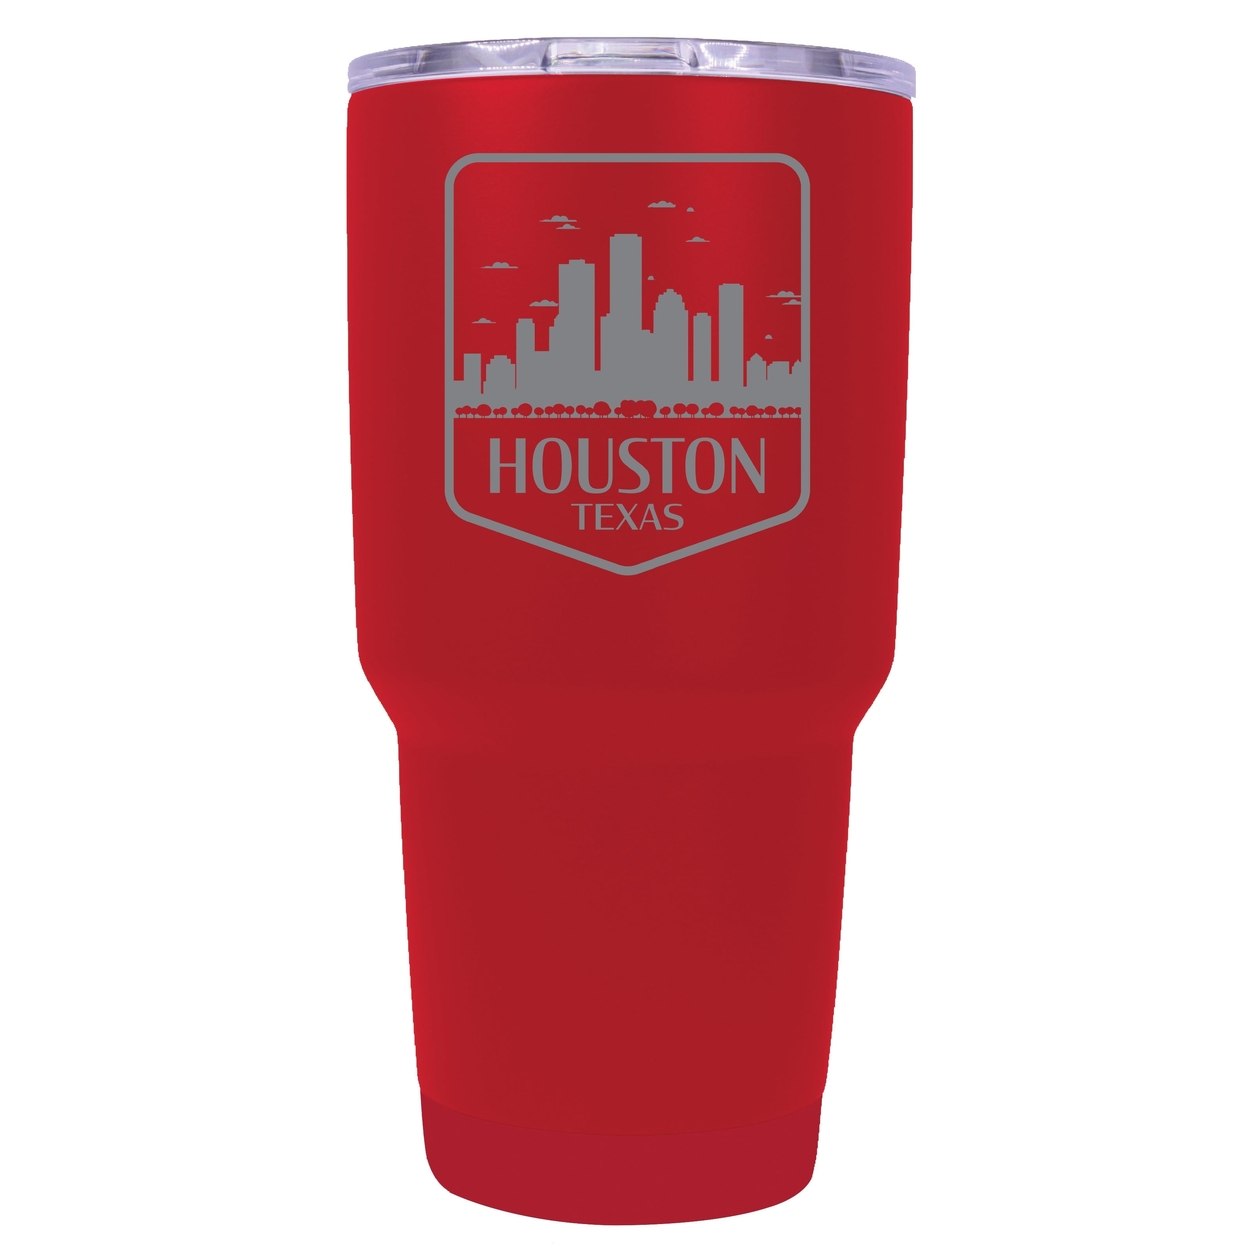 Houston Texas Souvenir 24 Oz Engraved Insulated Stainless Steel Tumbler - Red,,Single Unit